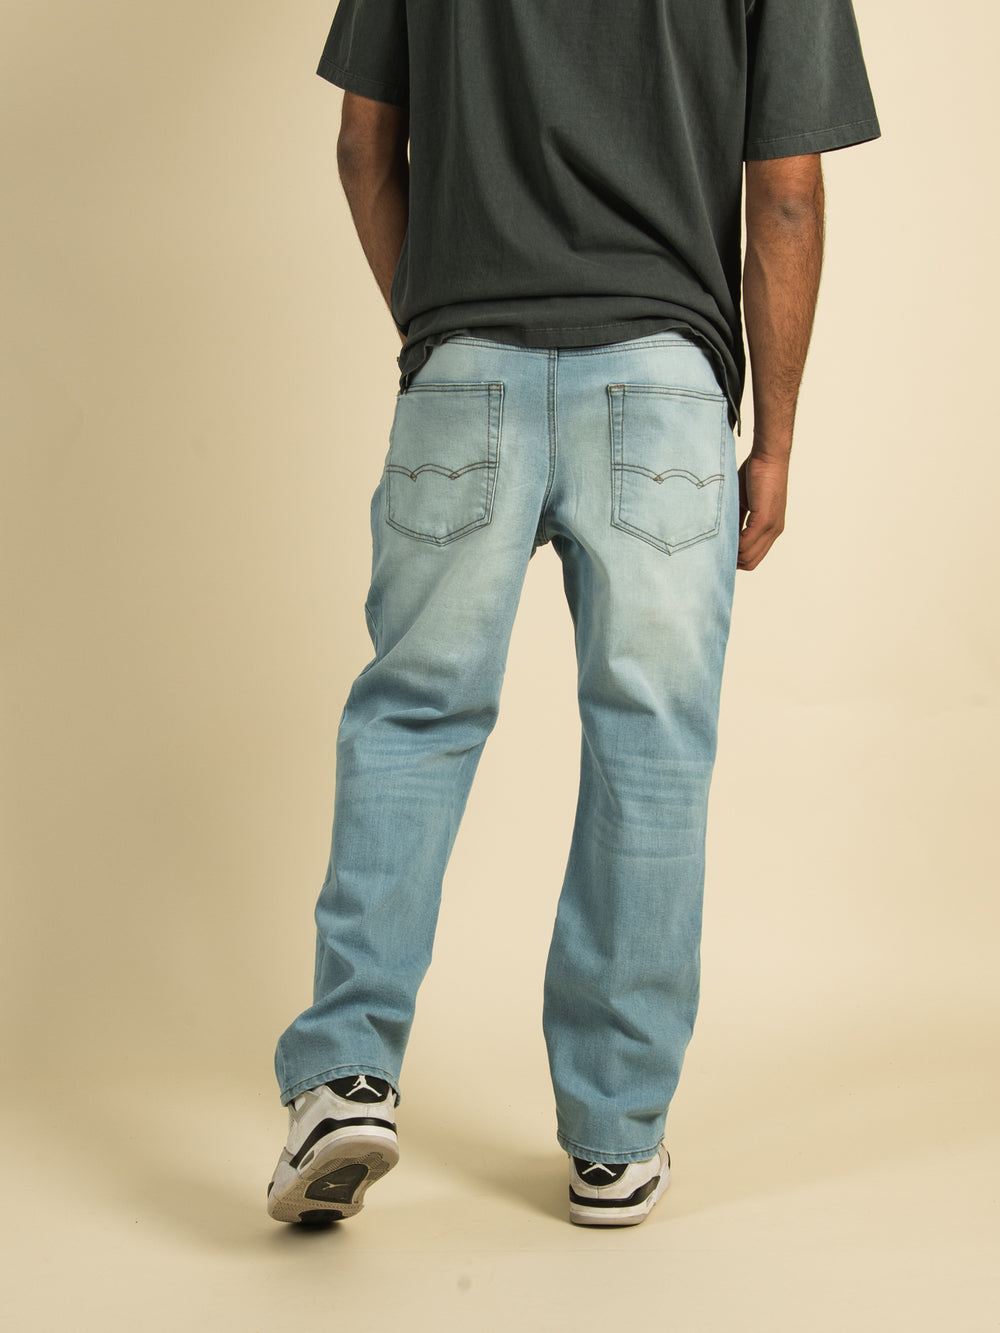 Lands' End Men's Recover 5 Pocket Traditional Fit Comfort Waist Denim Jeans  - 30x30 - Undyed Natural